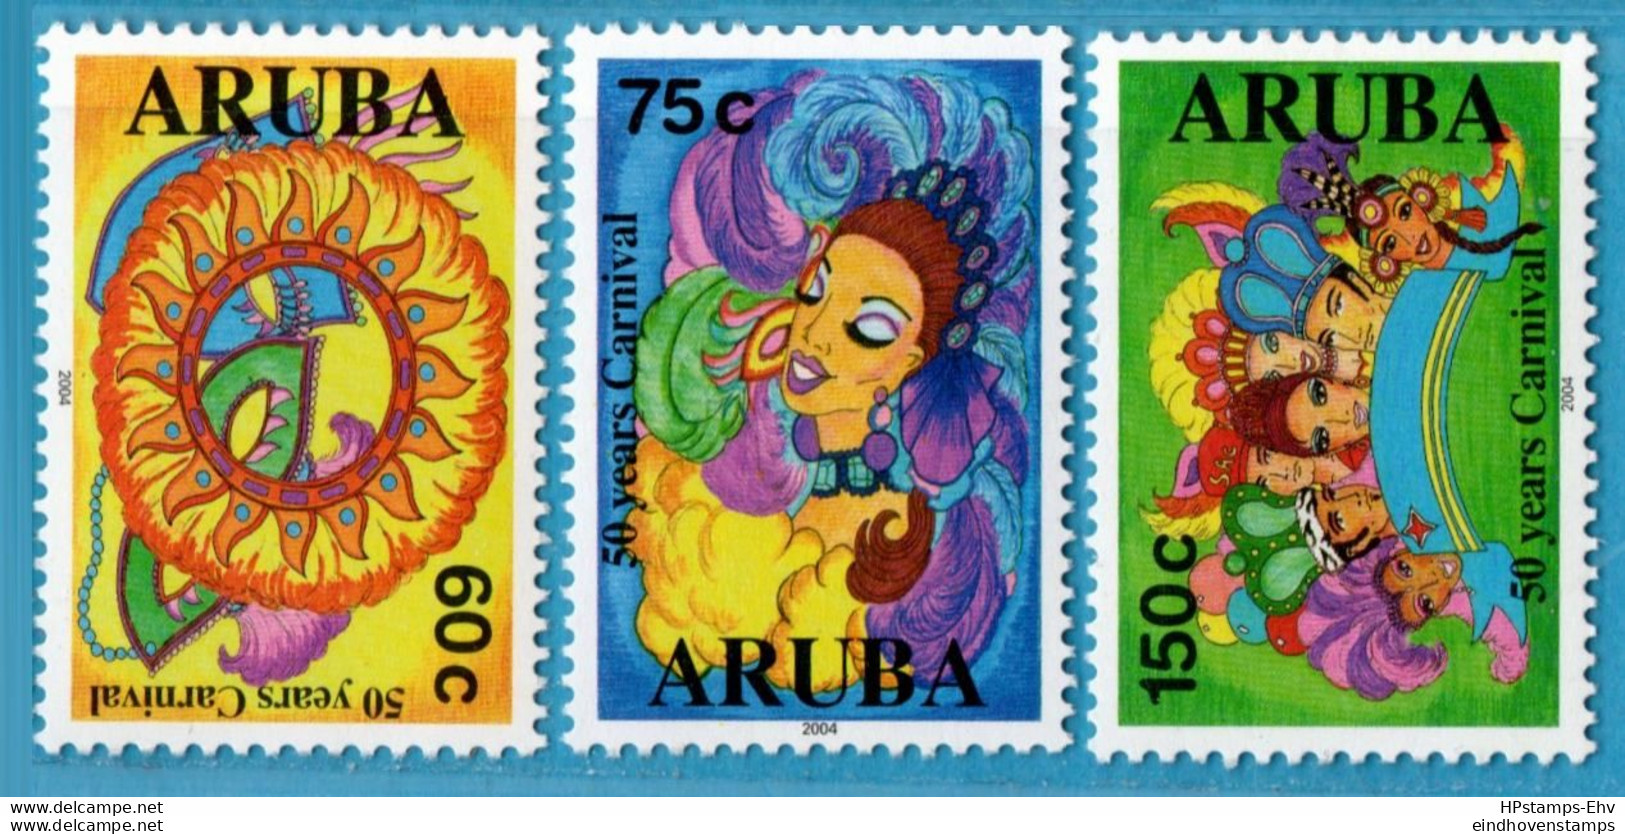 Aruba 2004 Carnavale 3 Values 04-01 MNH Masks, Costumes - Carnival